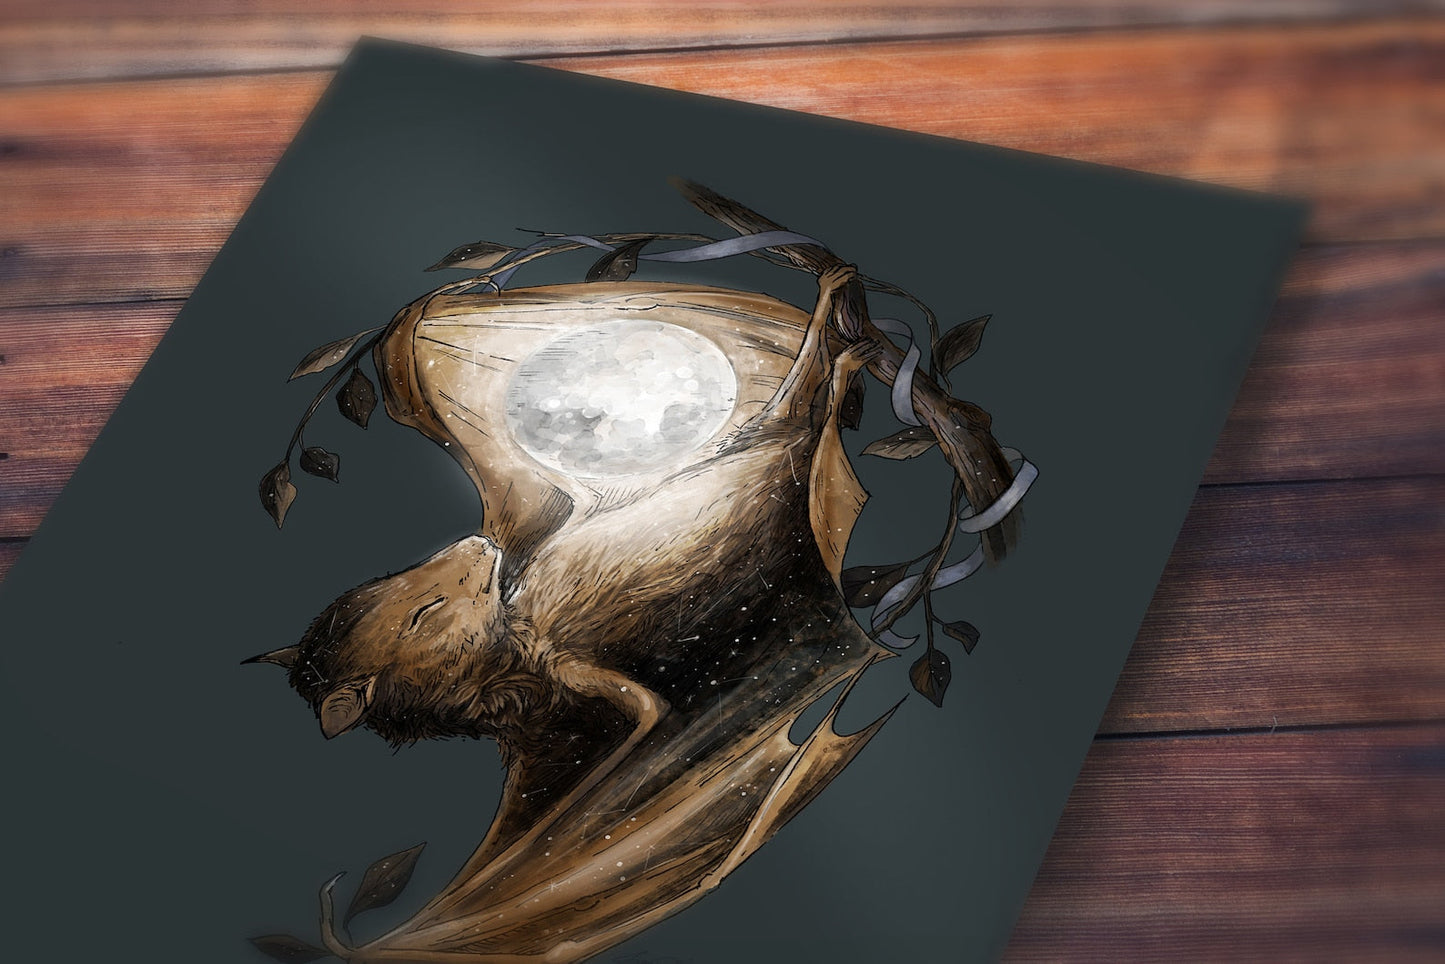 "Glow" Hanging Bat Art Print - Joanna Garcia Art